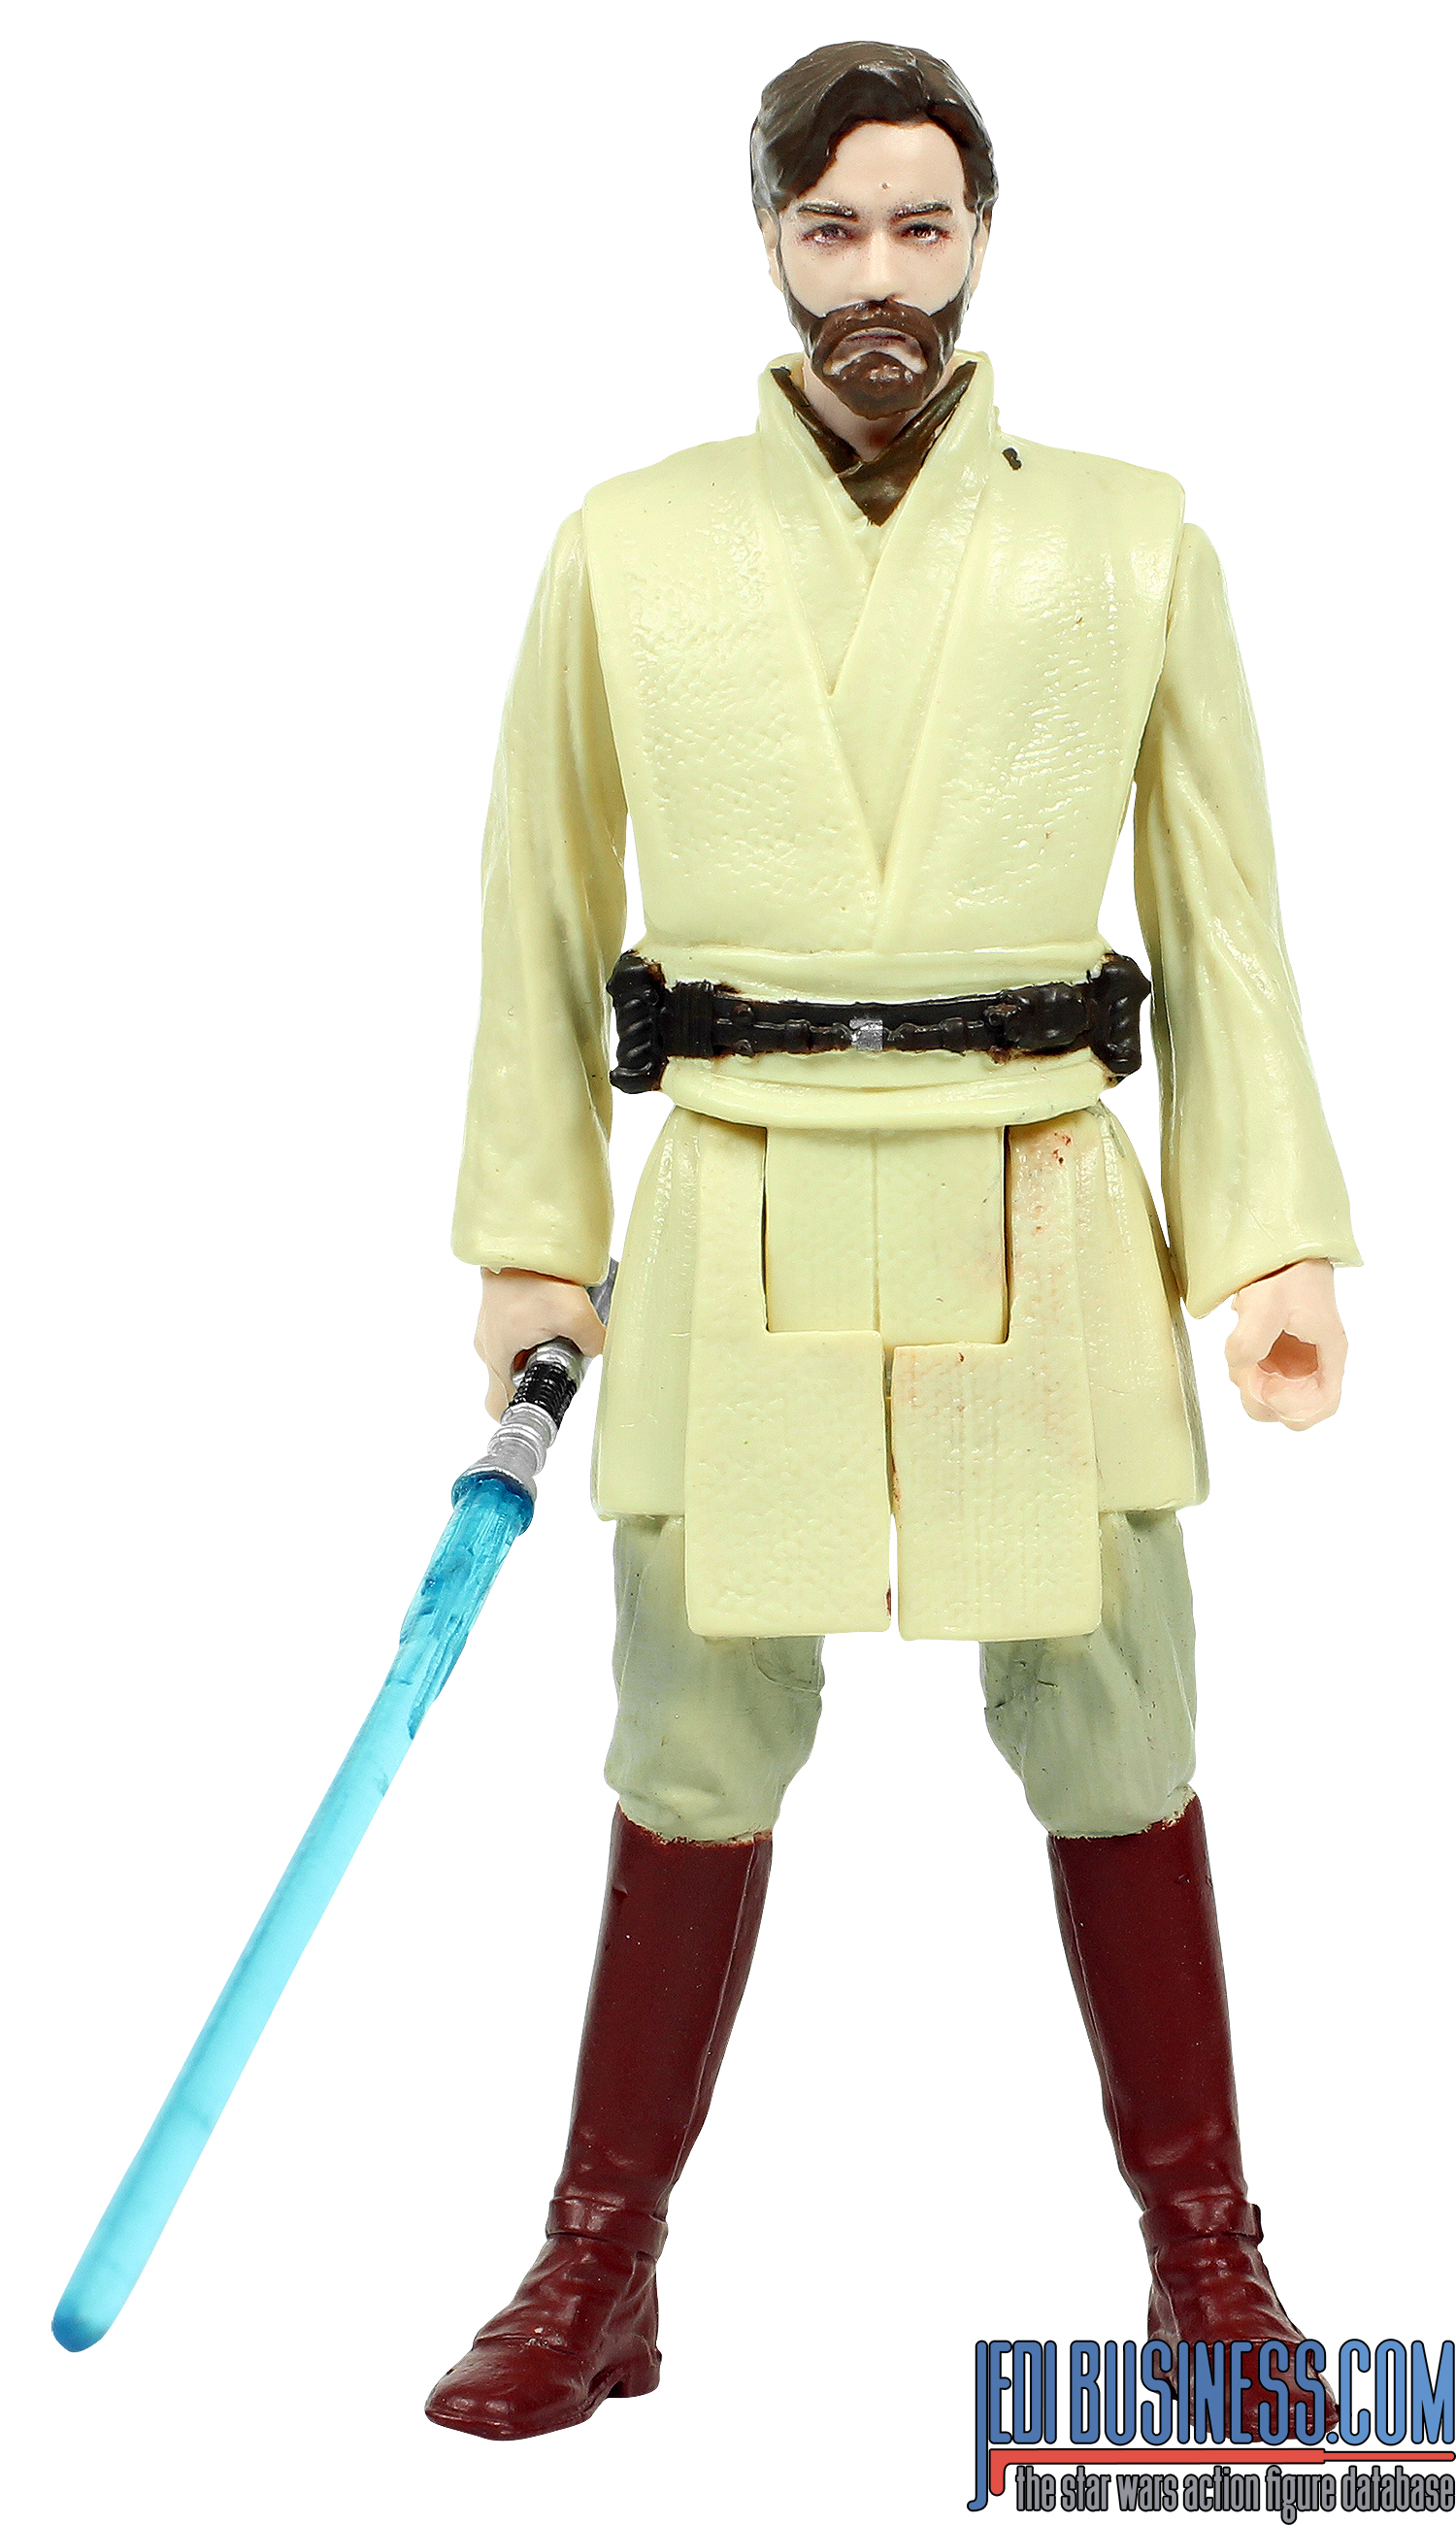 Obi-Wan Kenobi Jedi Order 5-Pack